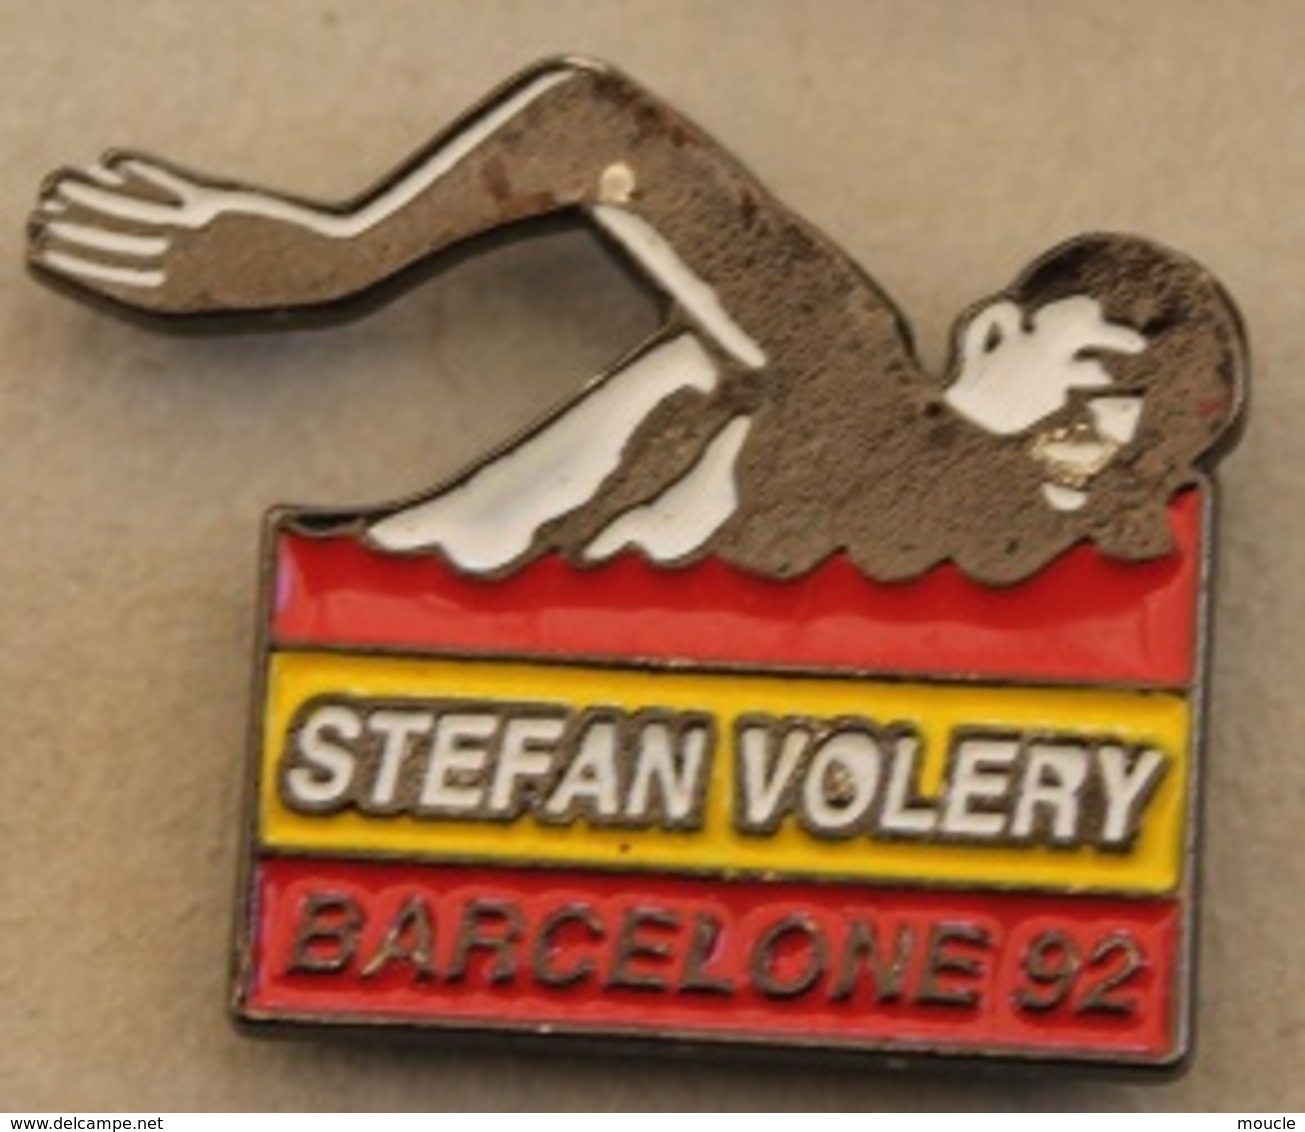 STEFAN VOLERY - BARCELONE 92 - JEUX OLYMPIQUES - NAGEUR SUISSE - PISCINE  -     (20) - Nuoto